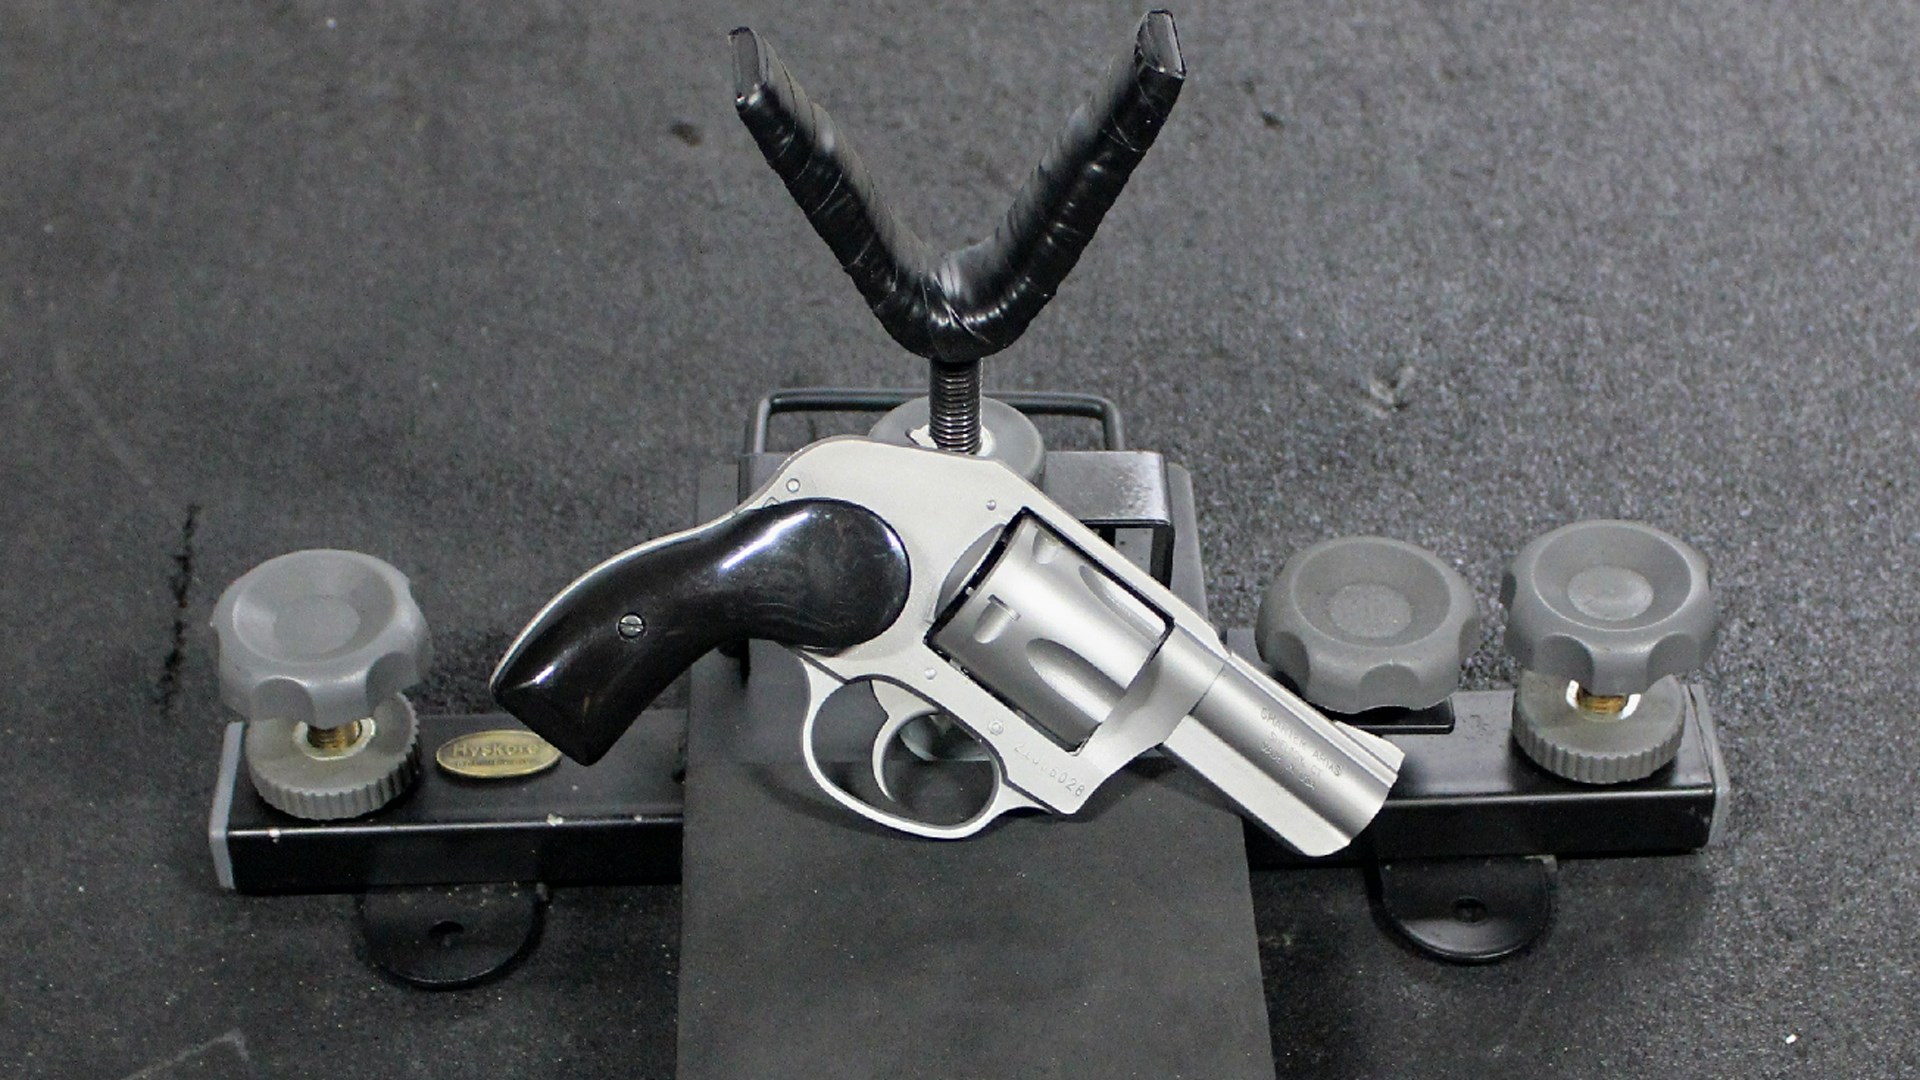 Charter Arms Bulldog right side revovler stainless steel on shooting rest